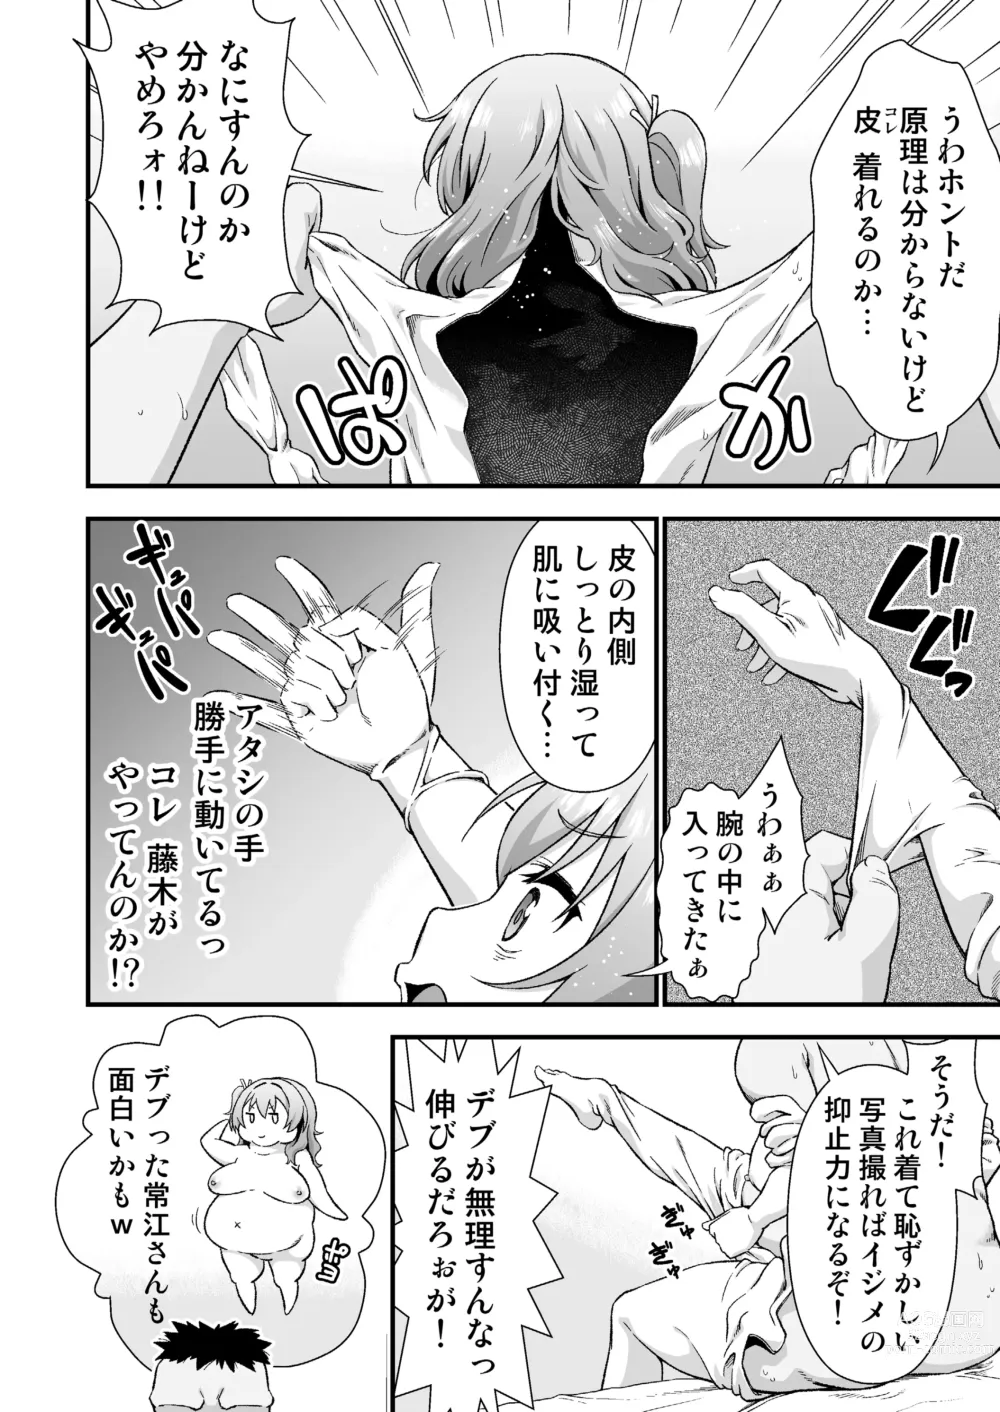 Page 6 of doujinshi Kawa-ka daiko o kawari